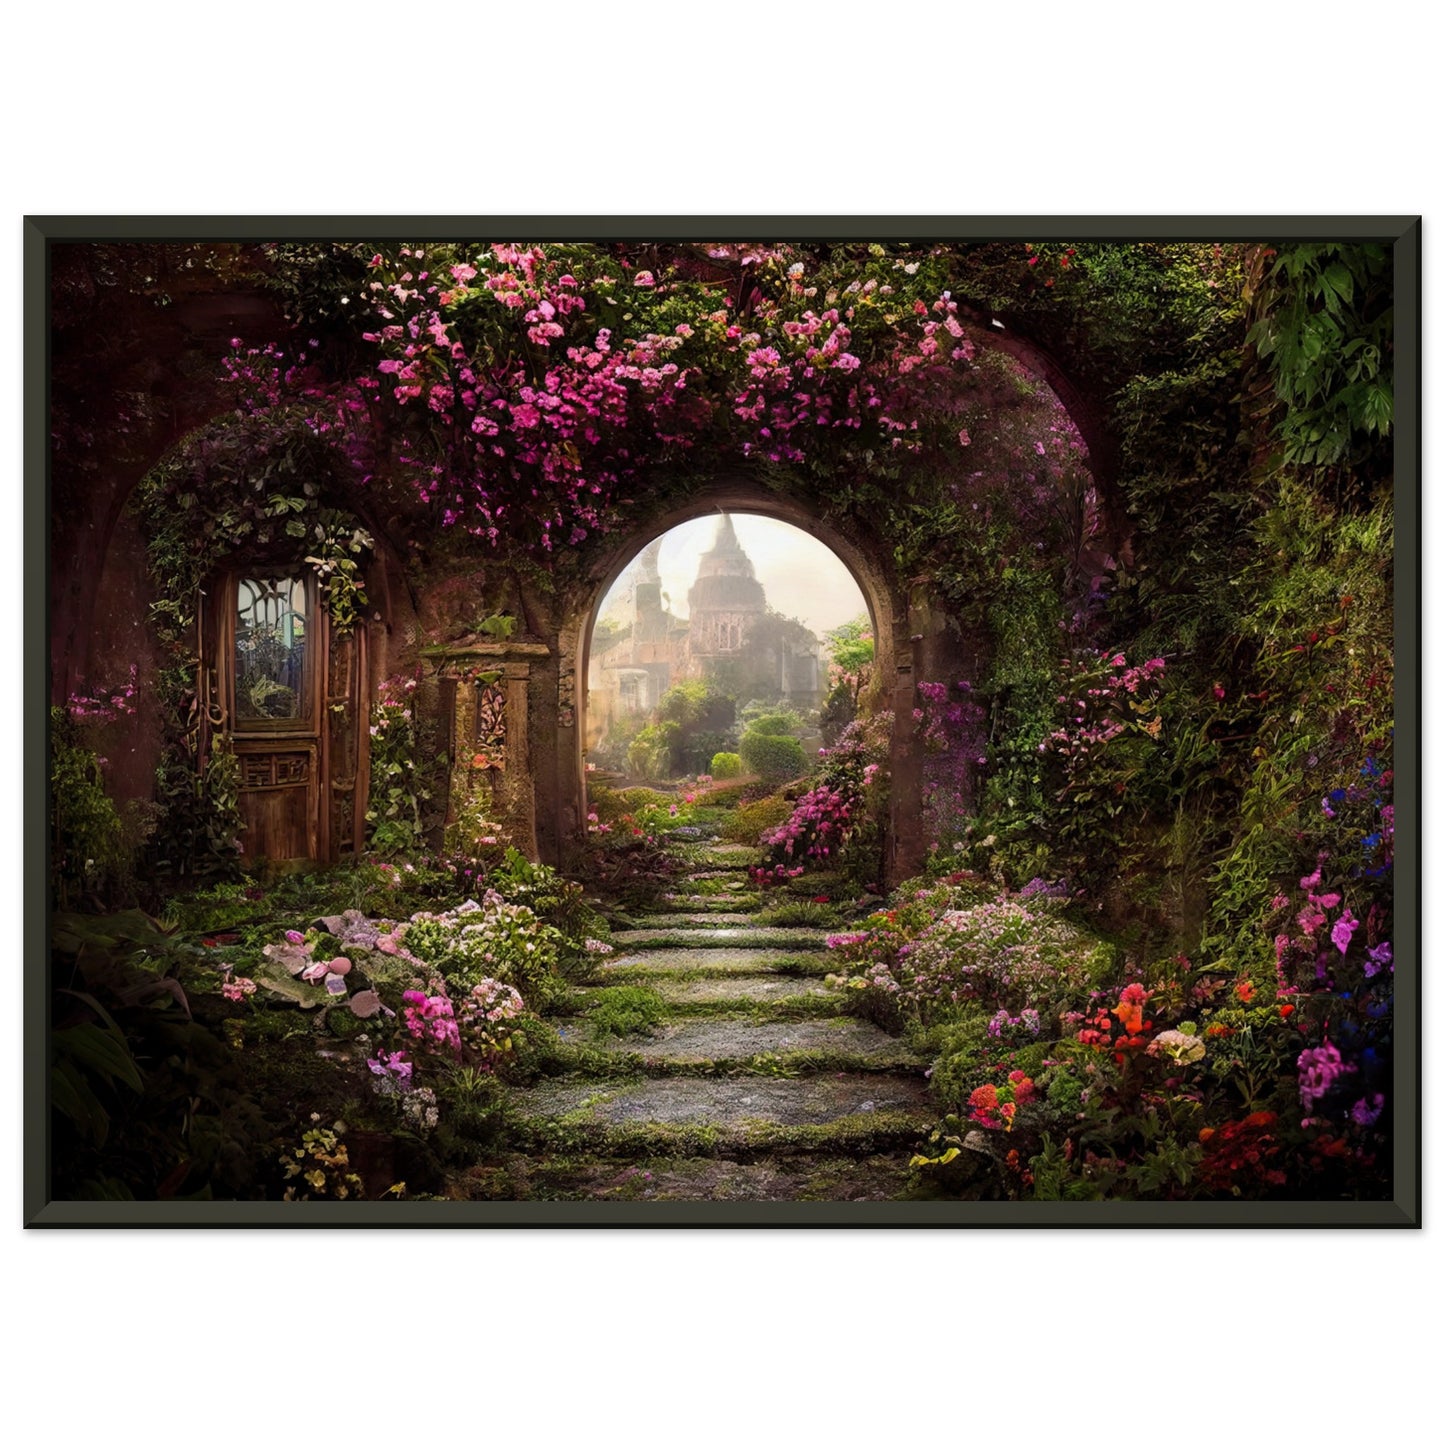 Fairytale garden with flower arches